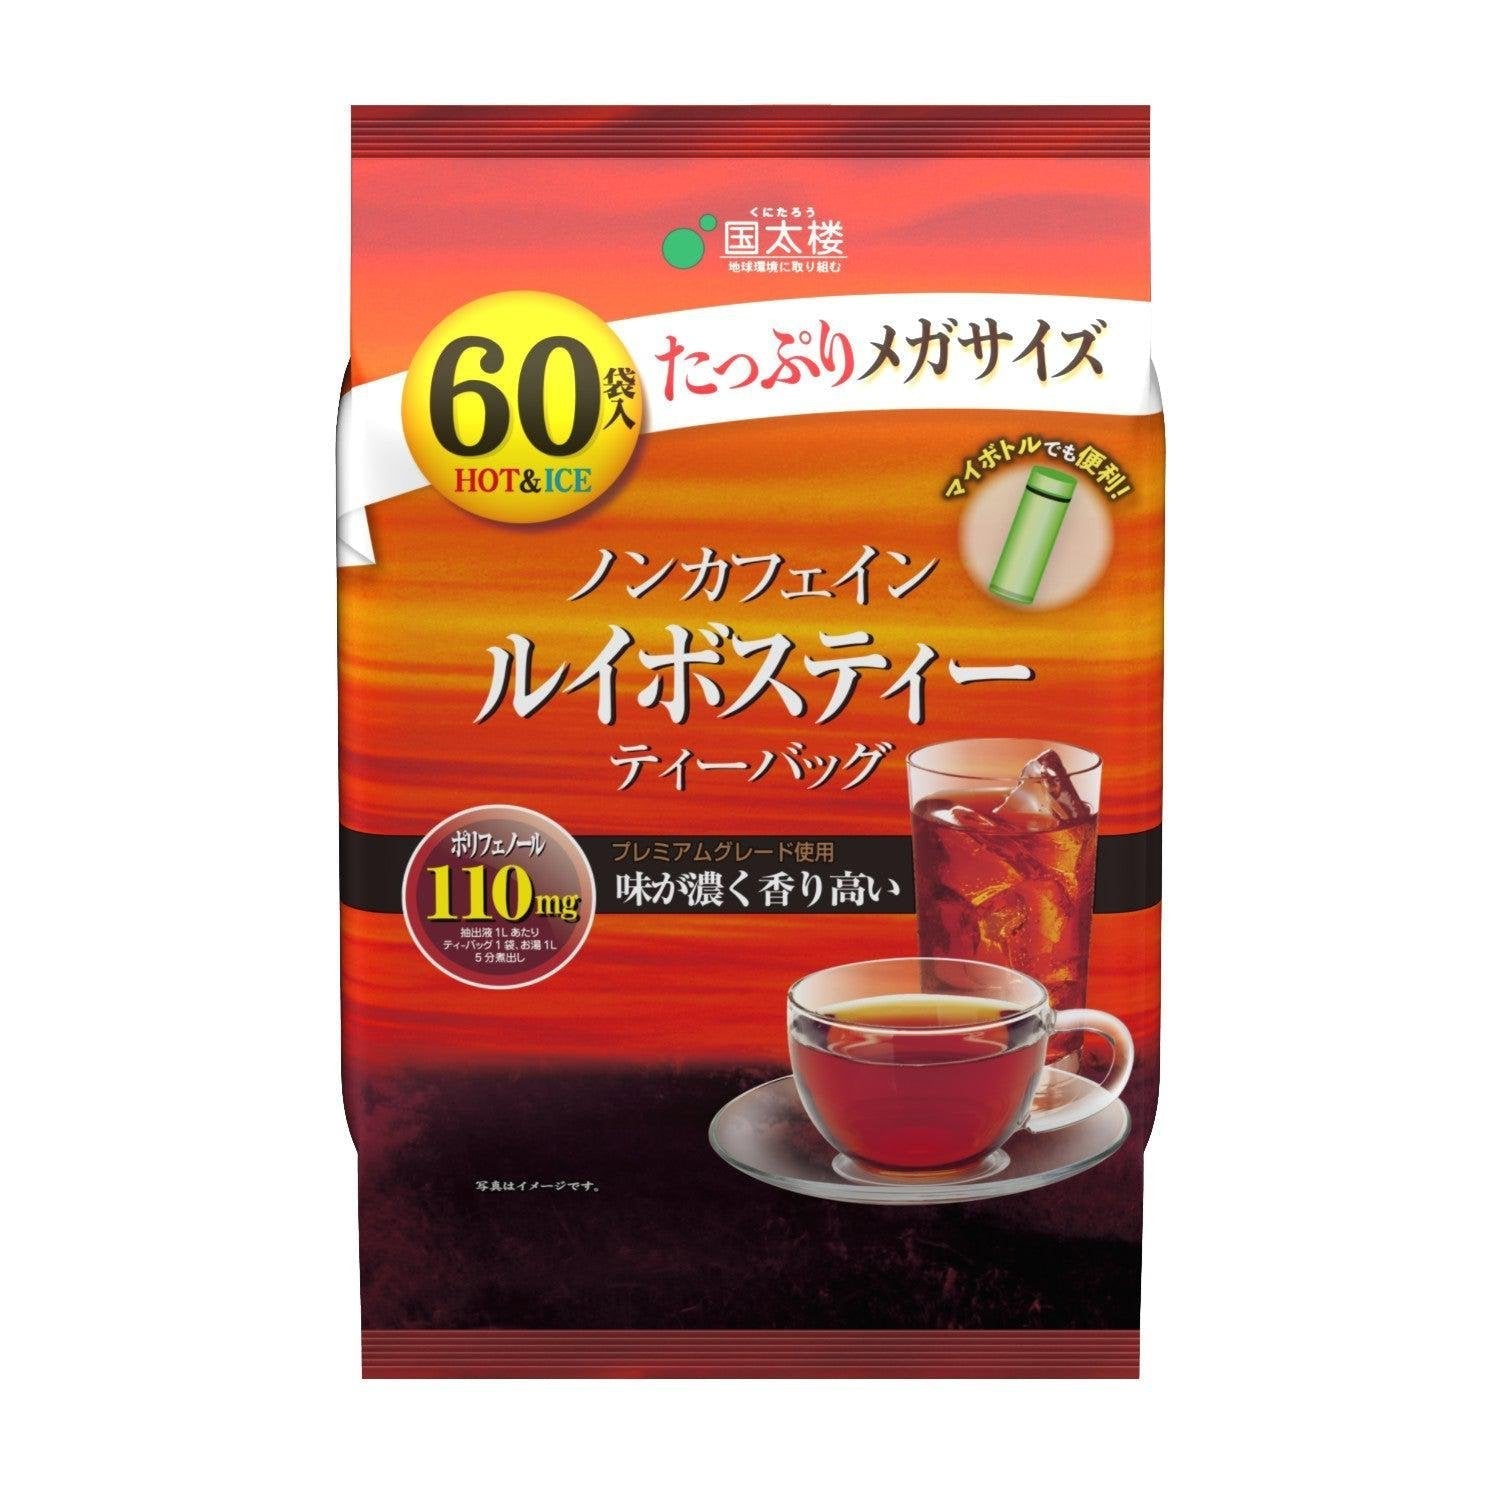 Kunitaro Premium Rooibos Tea 60 Bags